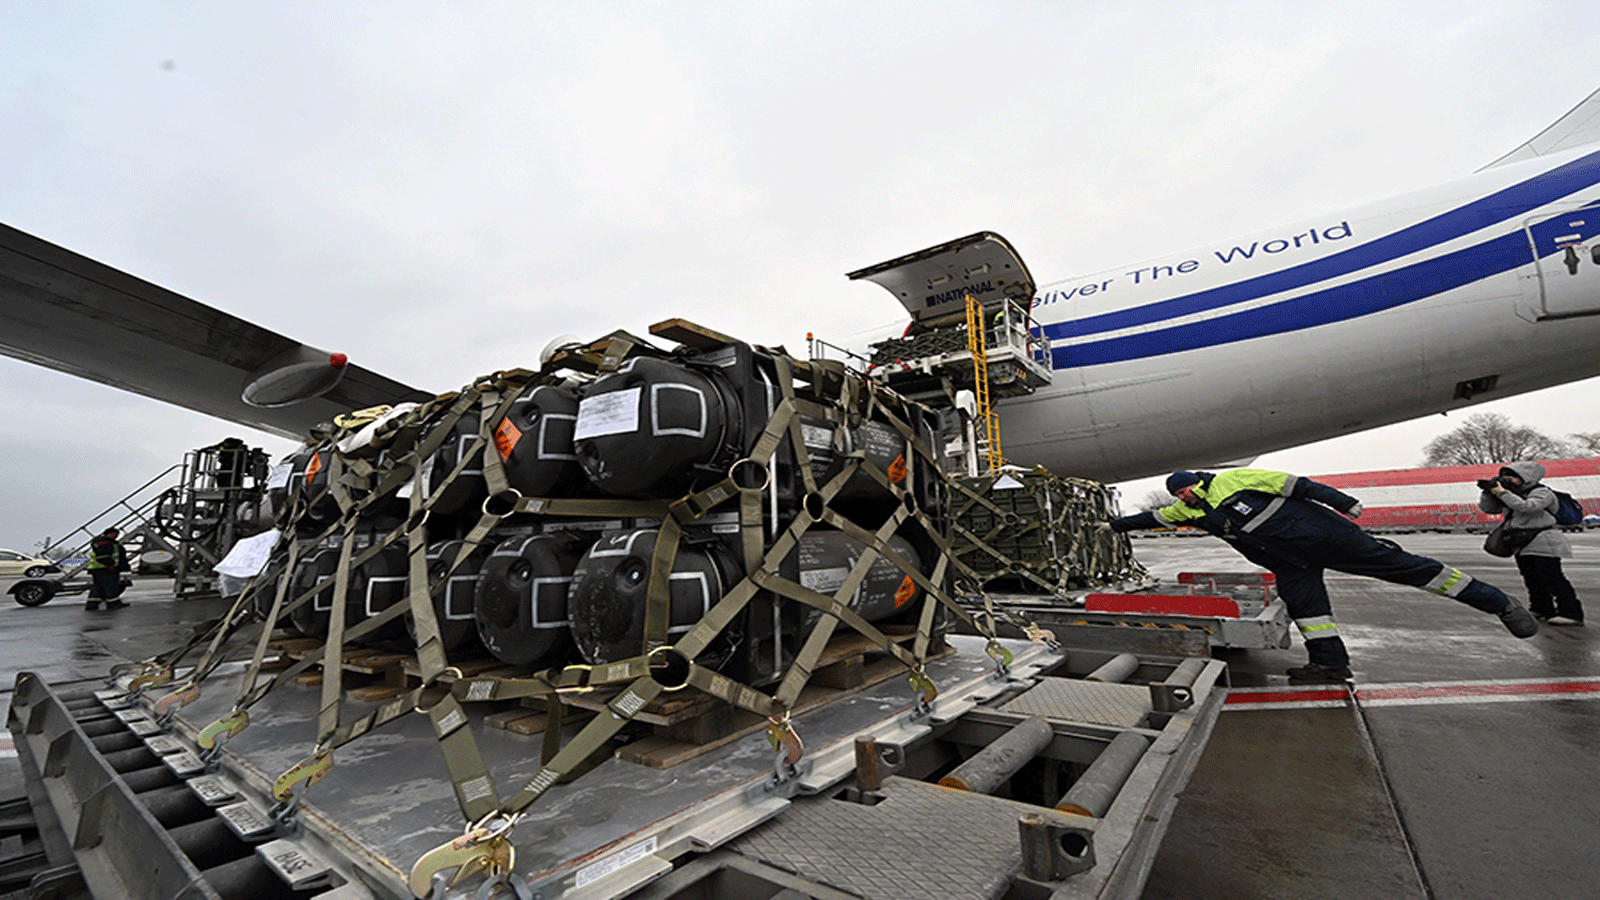 موظفون في مطار كييف يوم 11 فبراير / شباط يفرغون طائرة بوينج 747-412 مع FGM-148 Javelin 